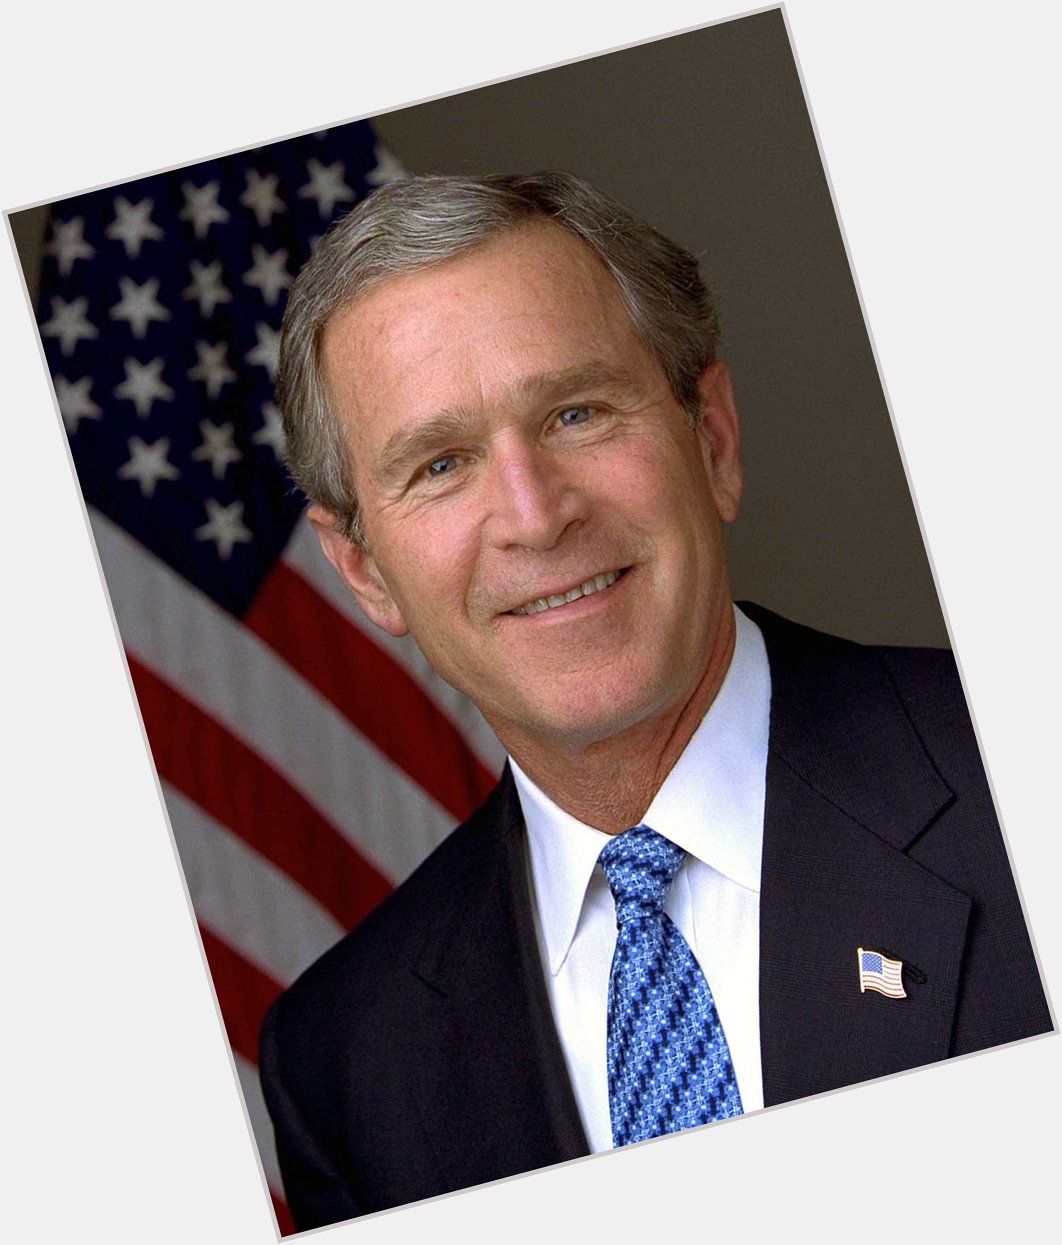 Happy Birthday to former President George W. Bush! 